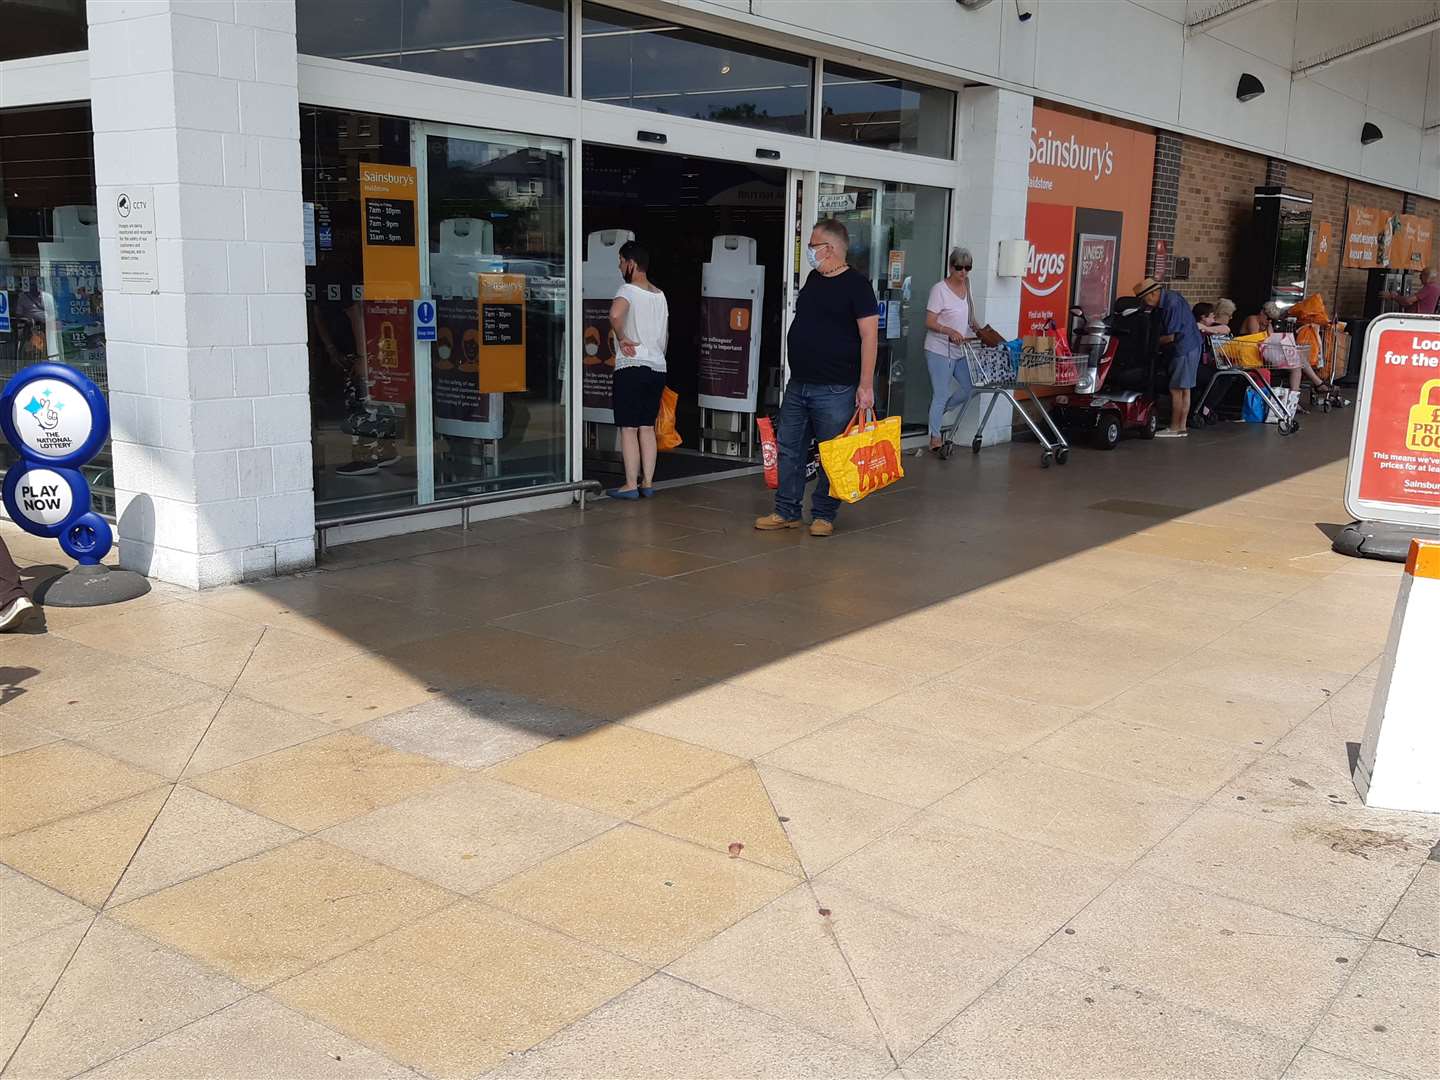 Full marks to Sainsburys at Maidstone